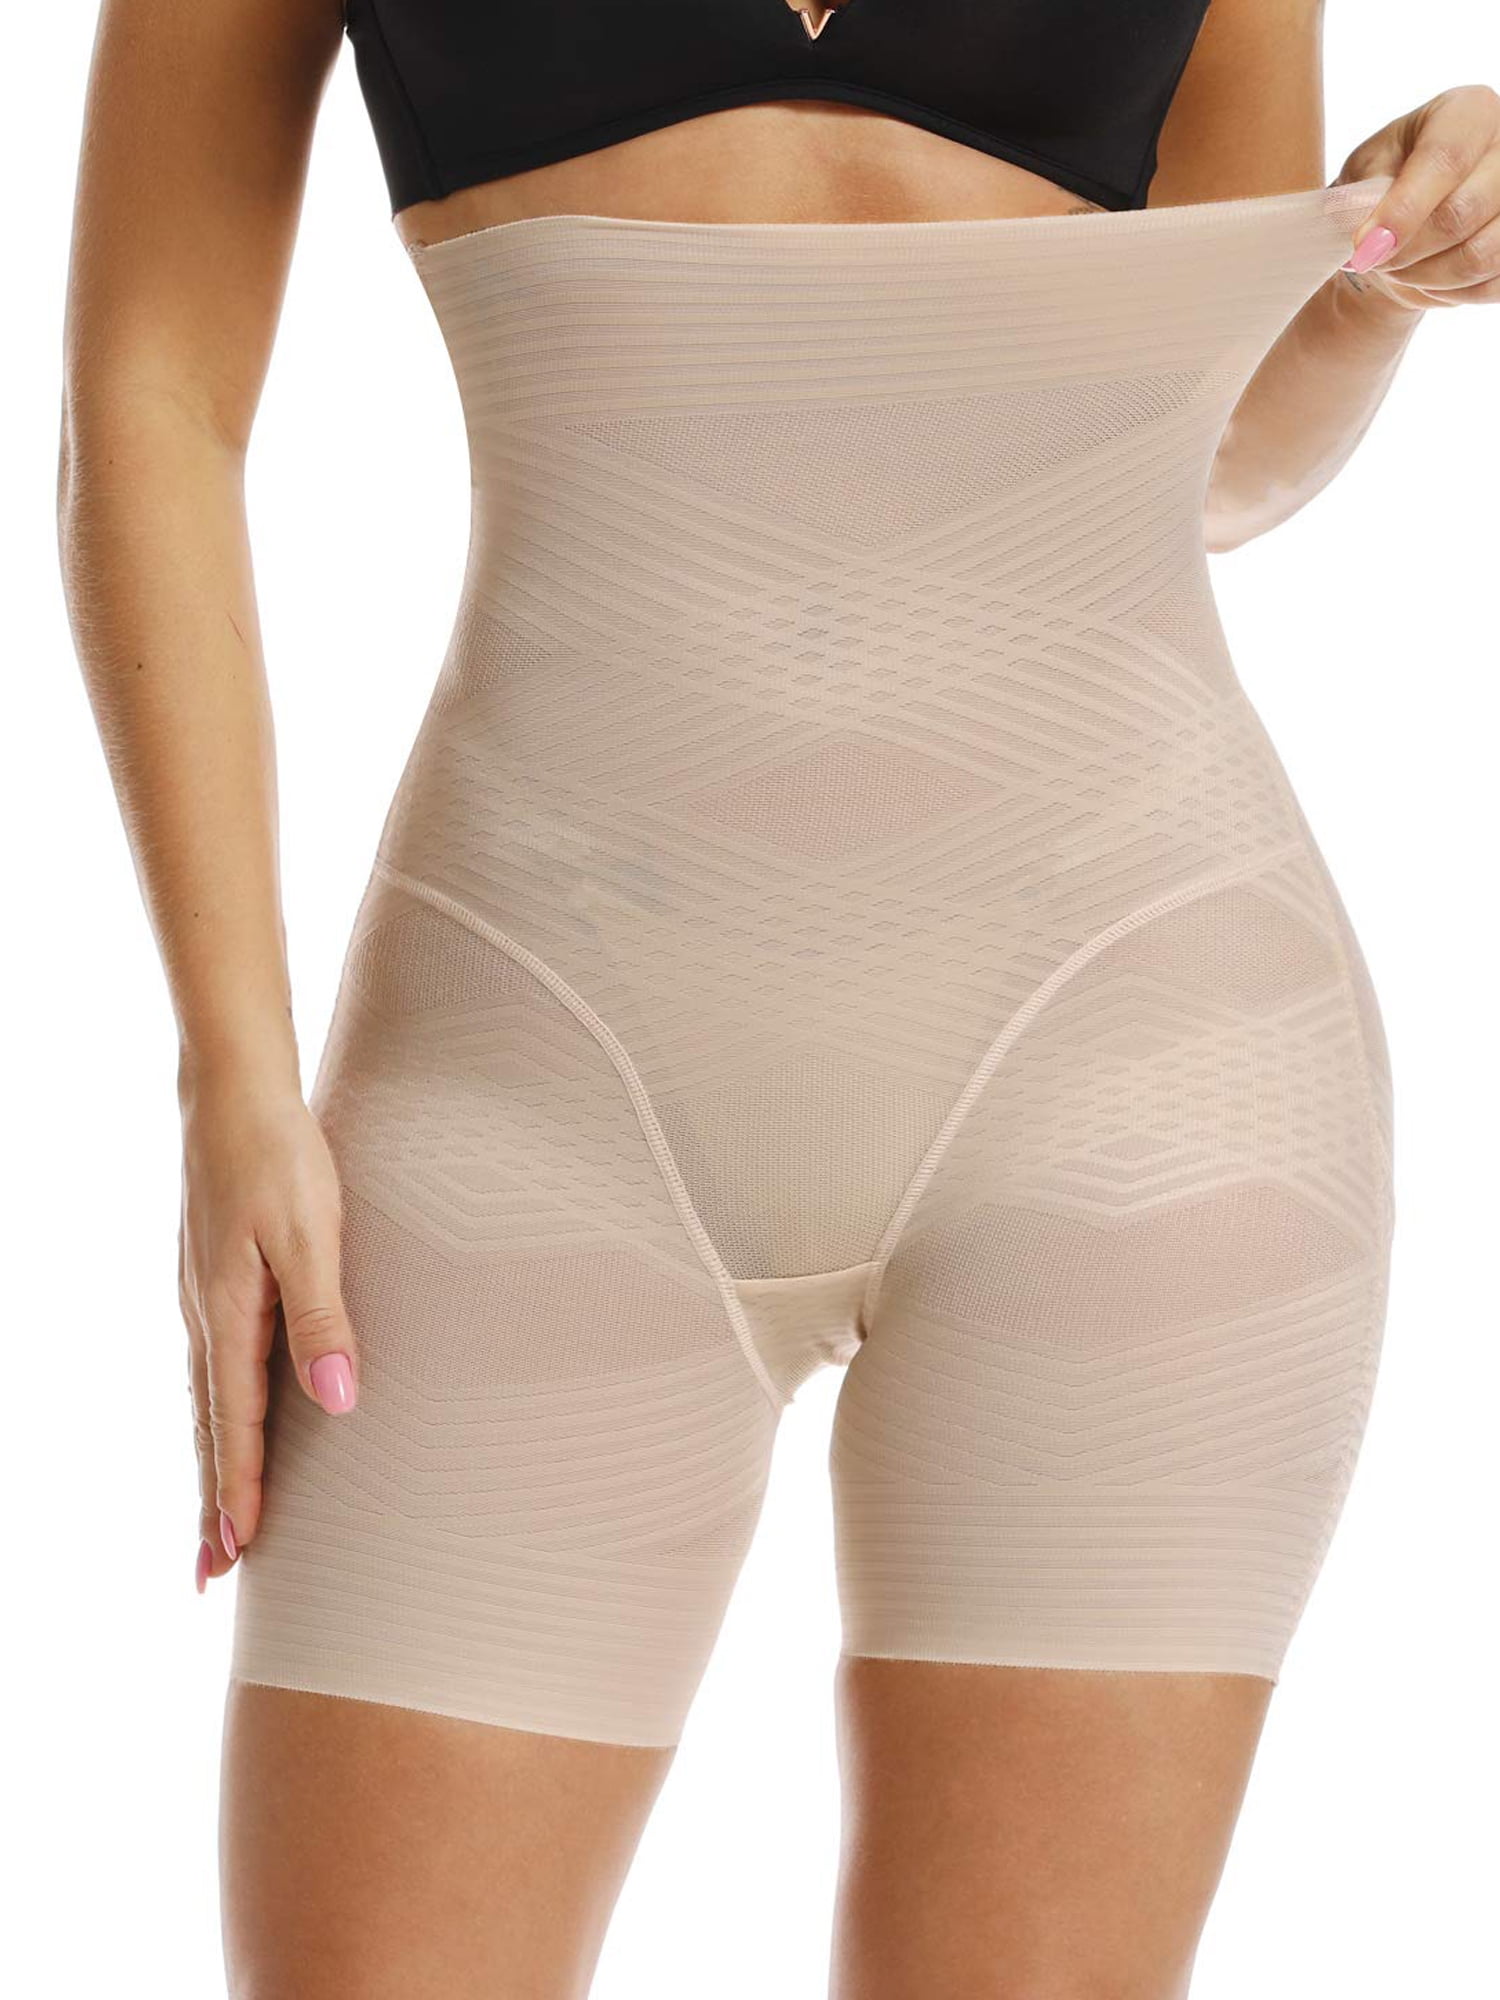 EasyComforts Lower Back Support Brief, Abdominal Shapewear Undergarment,  White, Medium